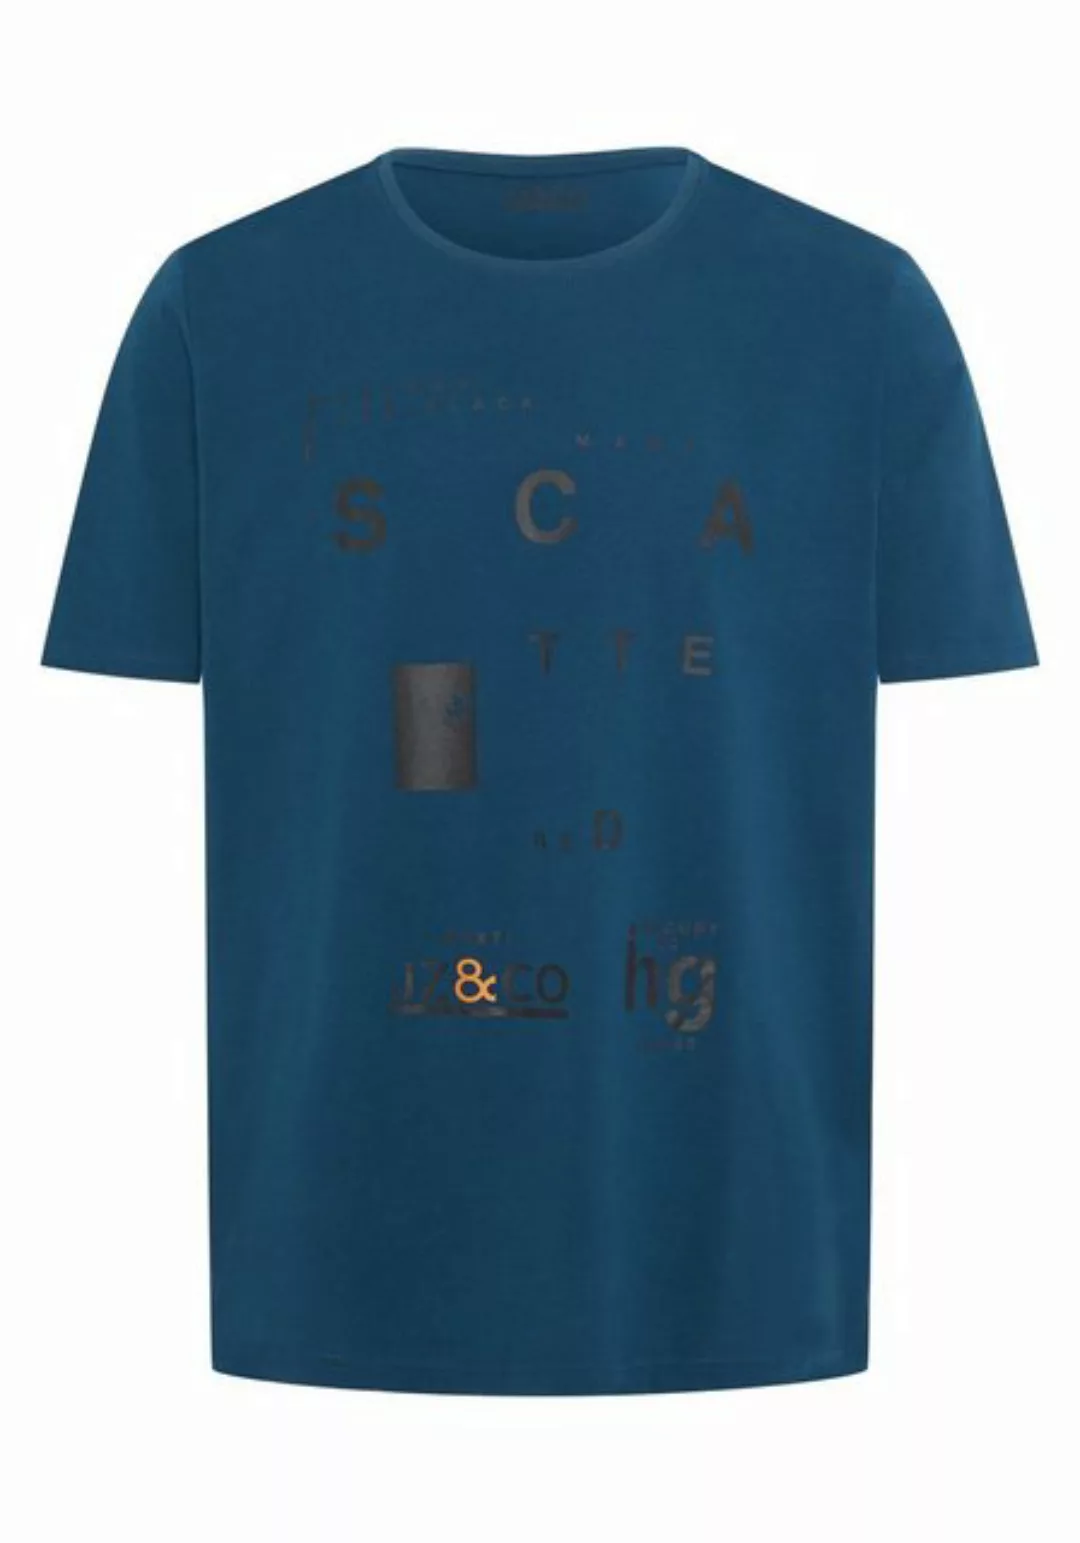 JZ & Co Print-Shirt aus Jersey günstig online kaufen